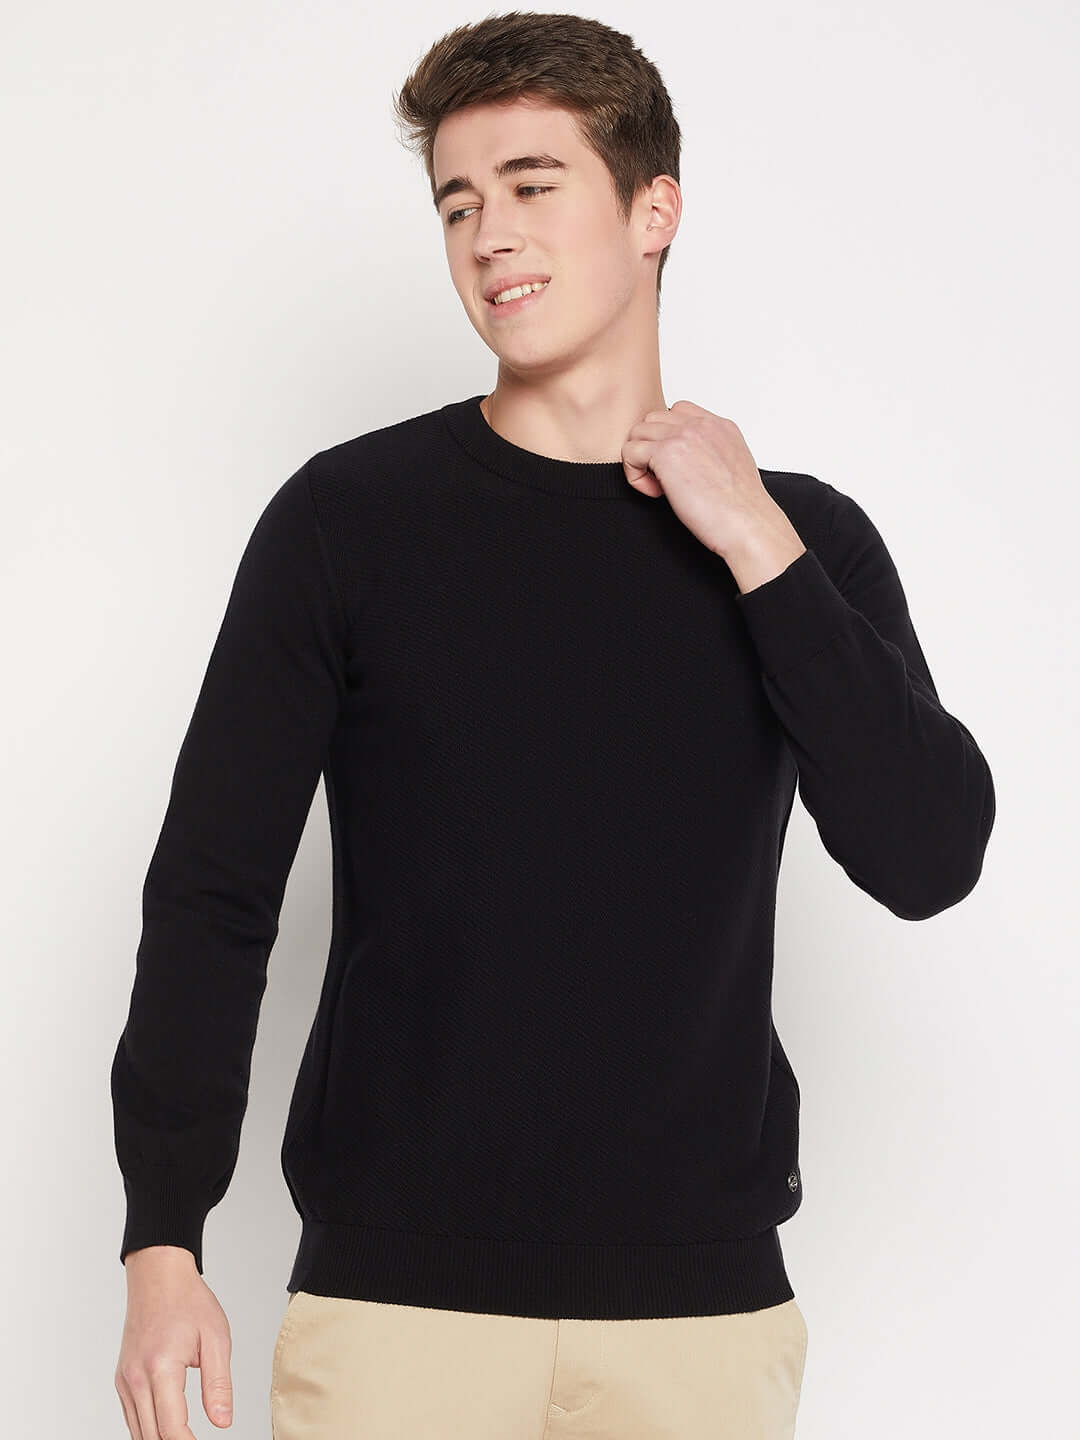 Camla Barcelona Black Sweater For Men